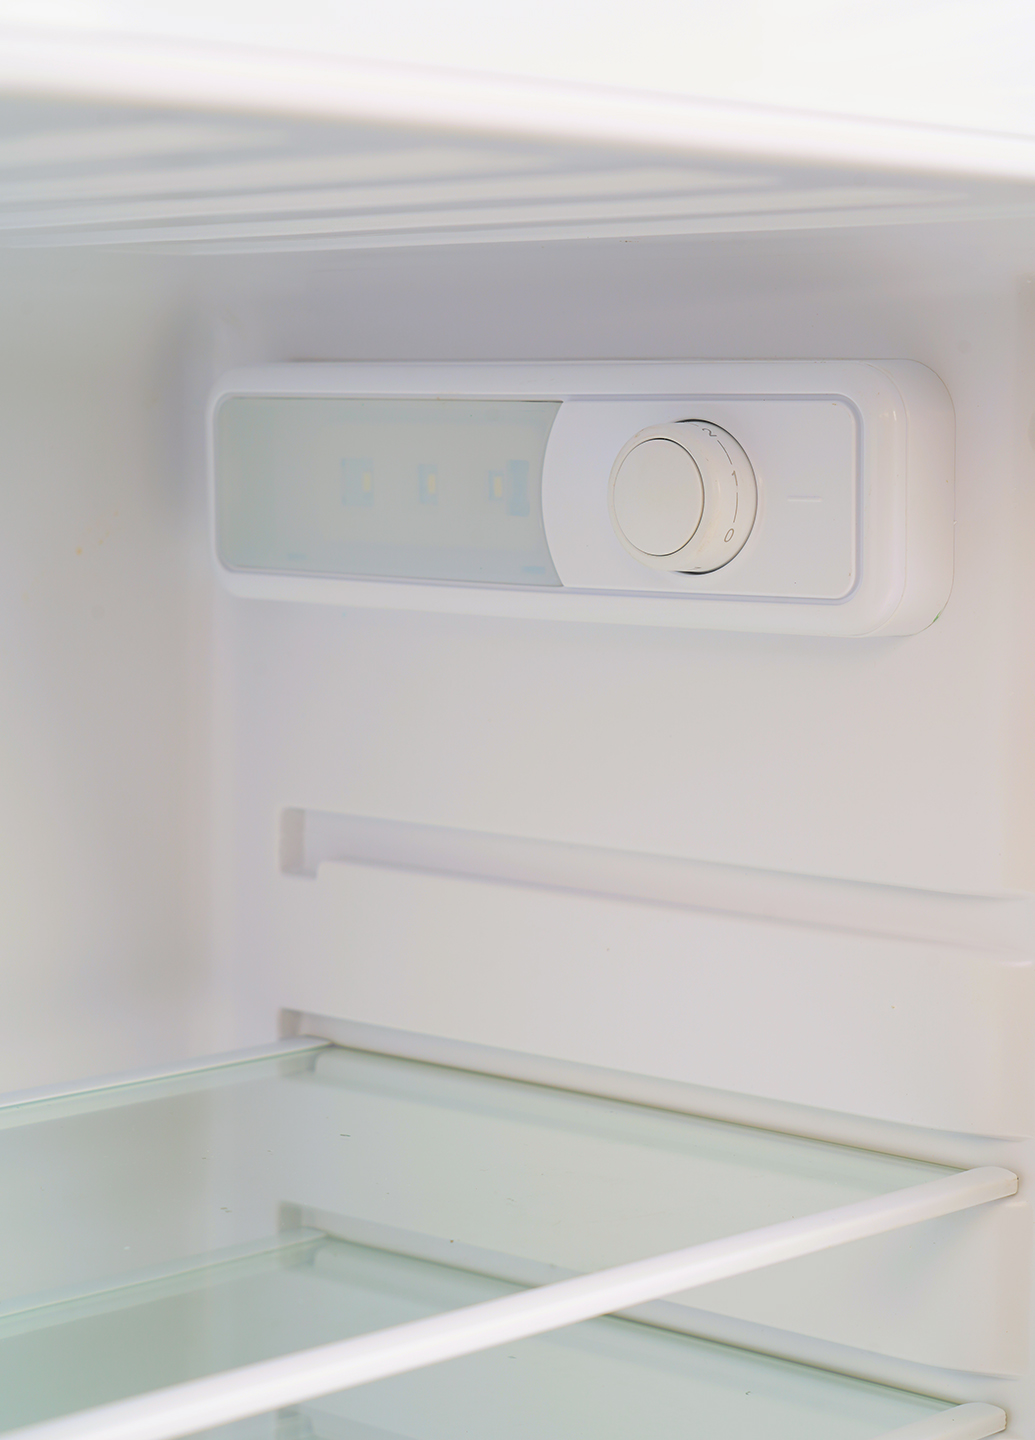 Refrigerator Mystery MRF-8125W